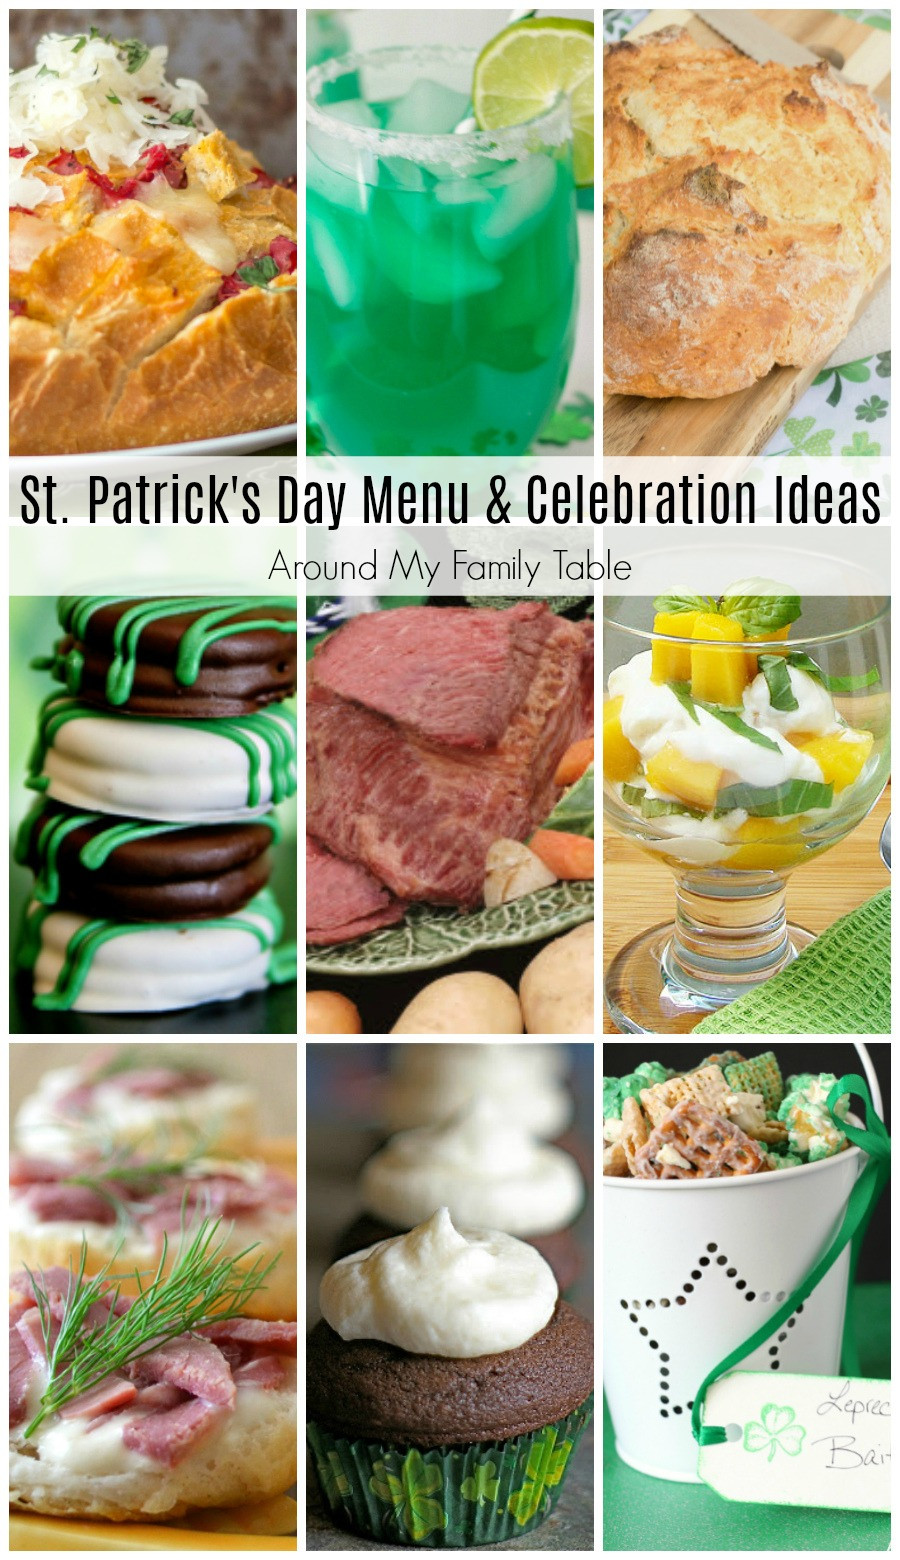 St Patrick's Day Menu Ideas
 St Patrick s Day Menu and Celebration Ideas Around My